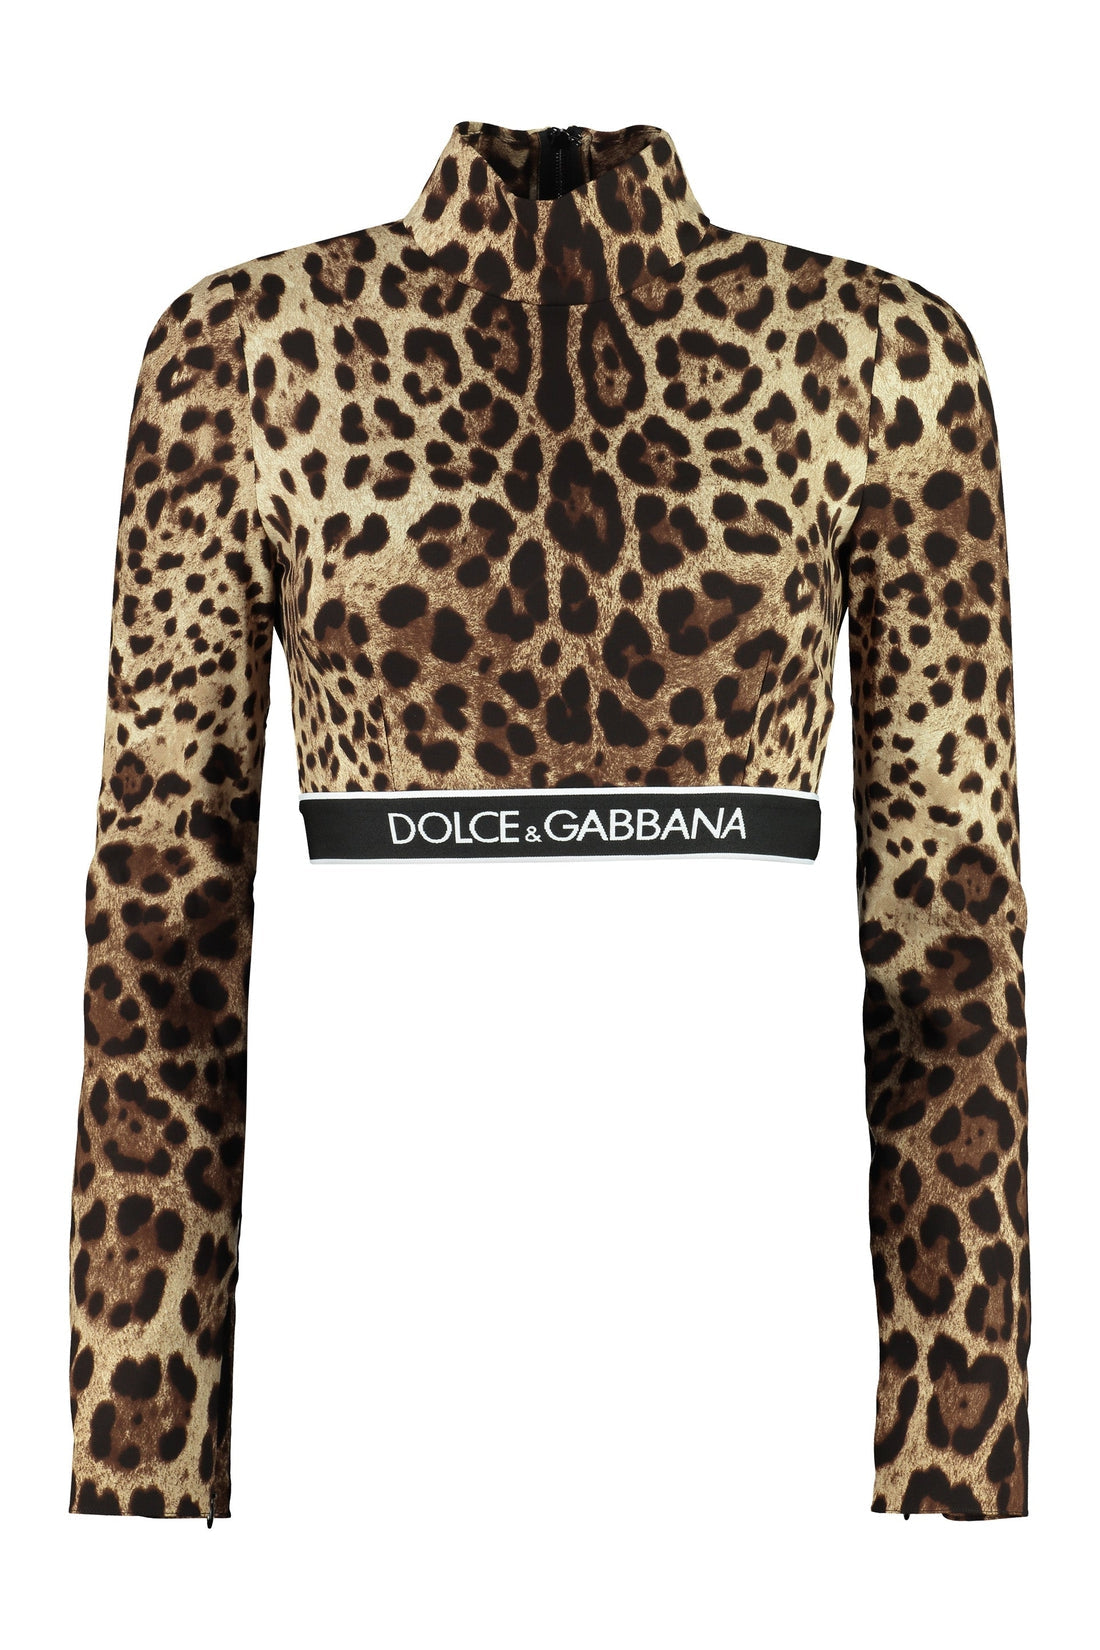 Dolce & Gabbana-OUTLET-SALE-Printed silk top-ARCHIVIST